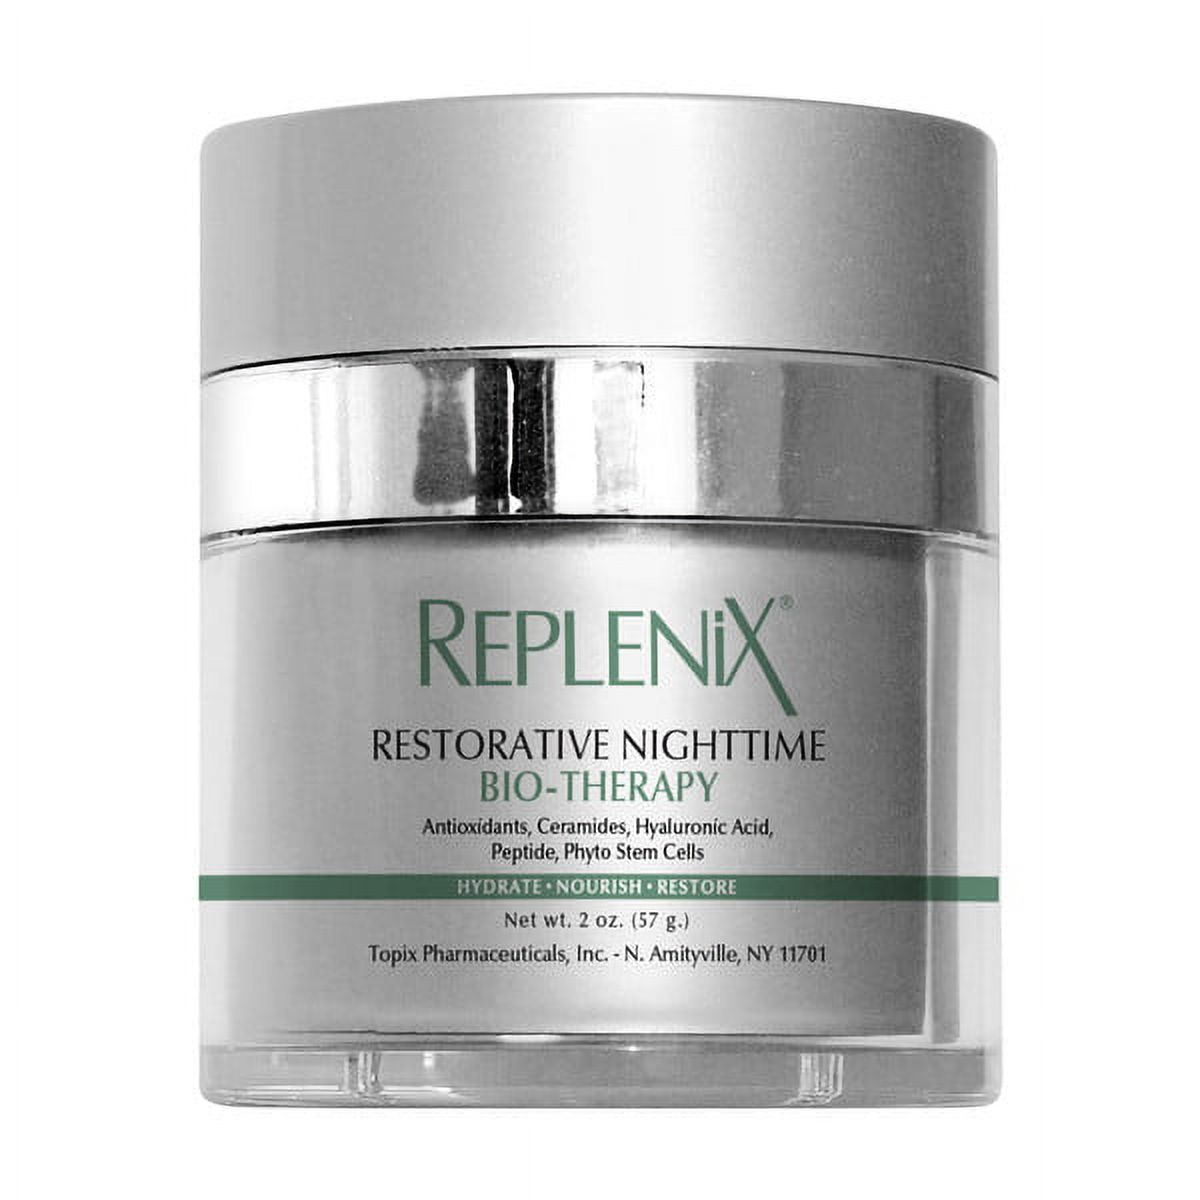 Topix Pharmaceuticals Replenix Restorative Nighttime Bio-Therapy Cream, 2 Oz - image 1 of 2